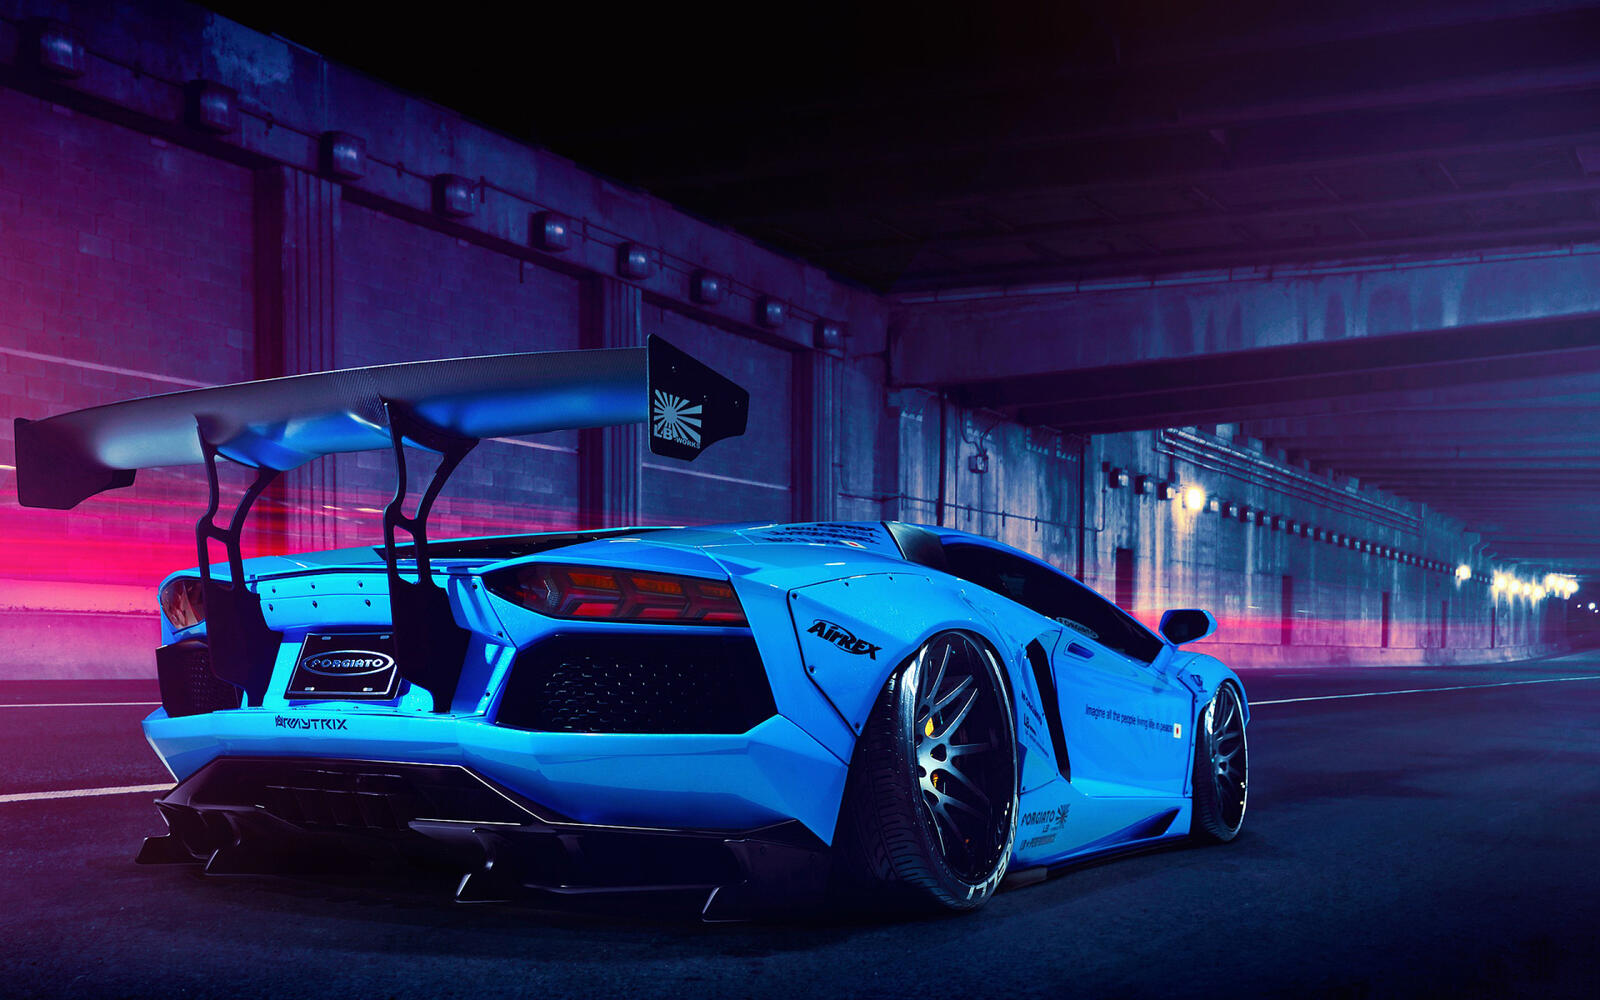 Free photo A rendering of the Lamborghini Aventador in blue.